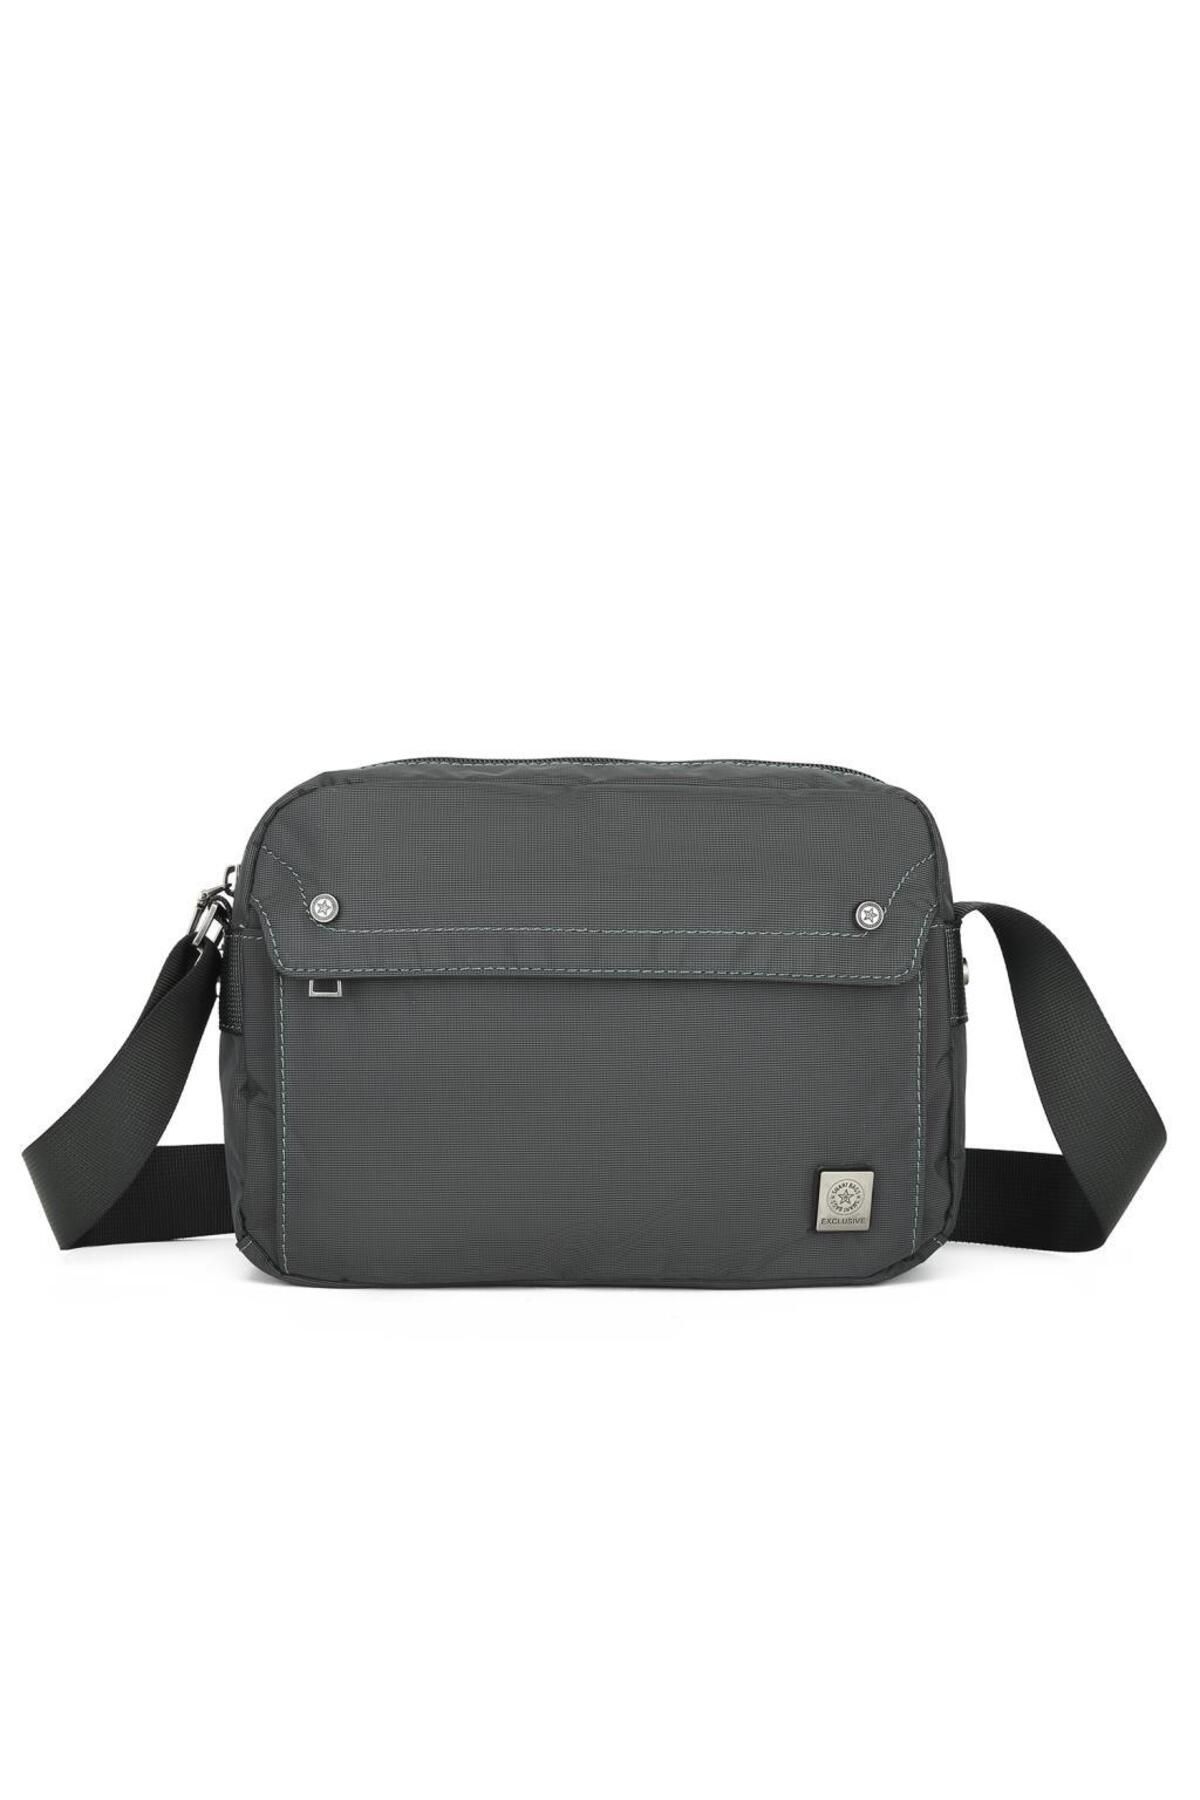 Smart Bags Exclusive Serisi Uniseks Postacı Çantası Smart Bags 8703